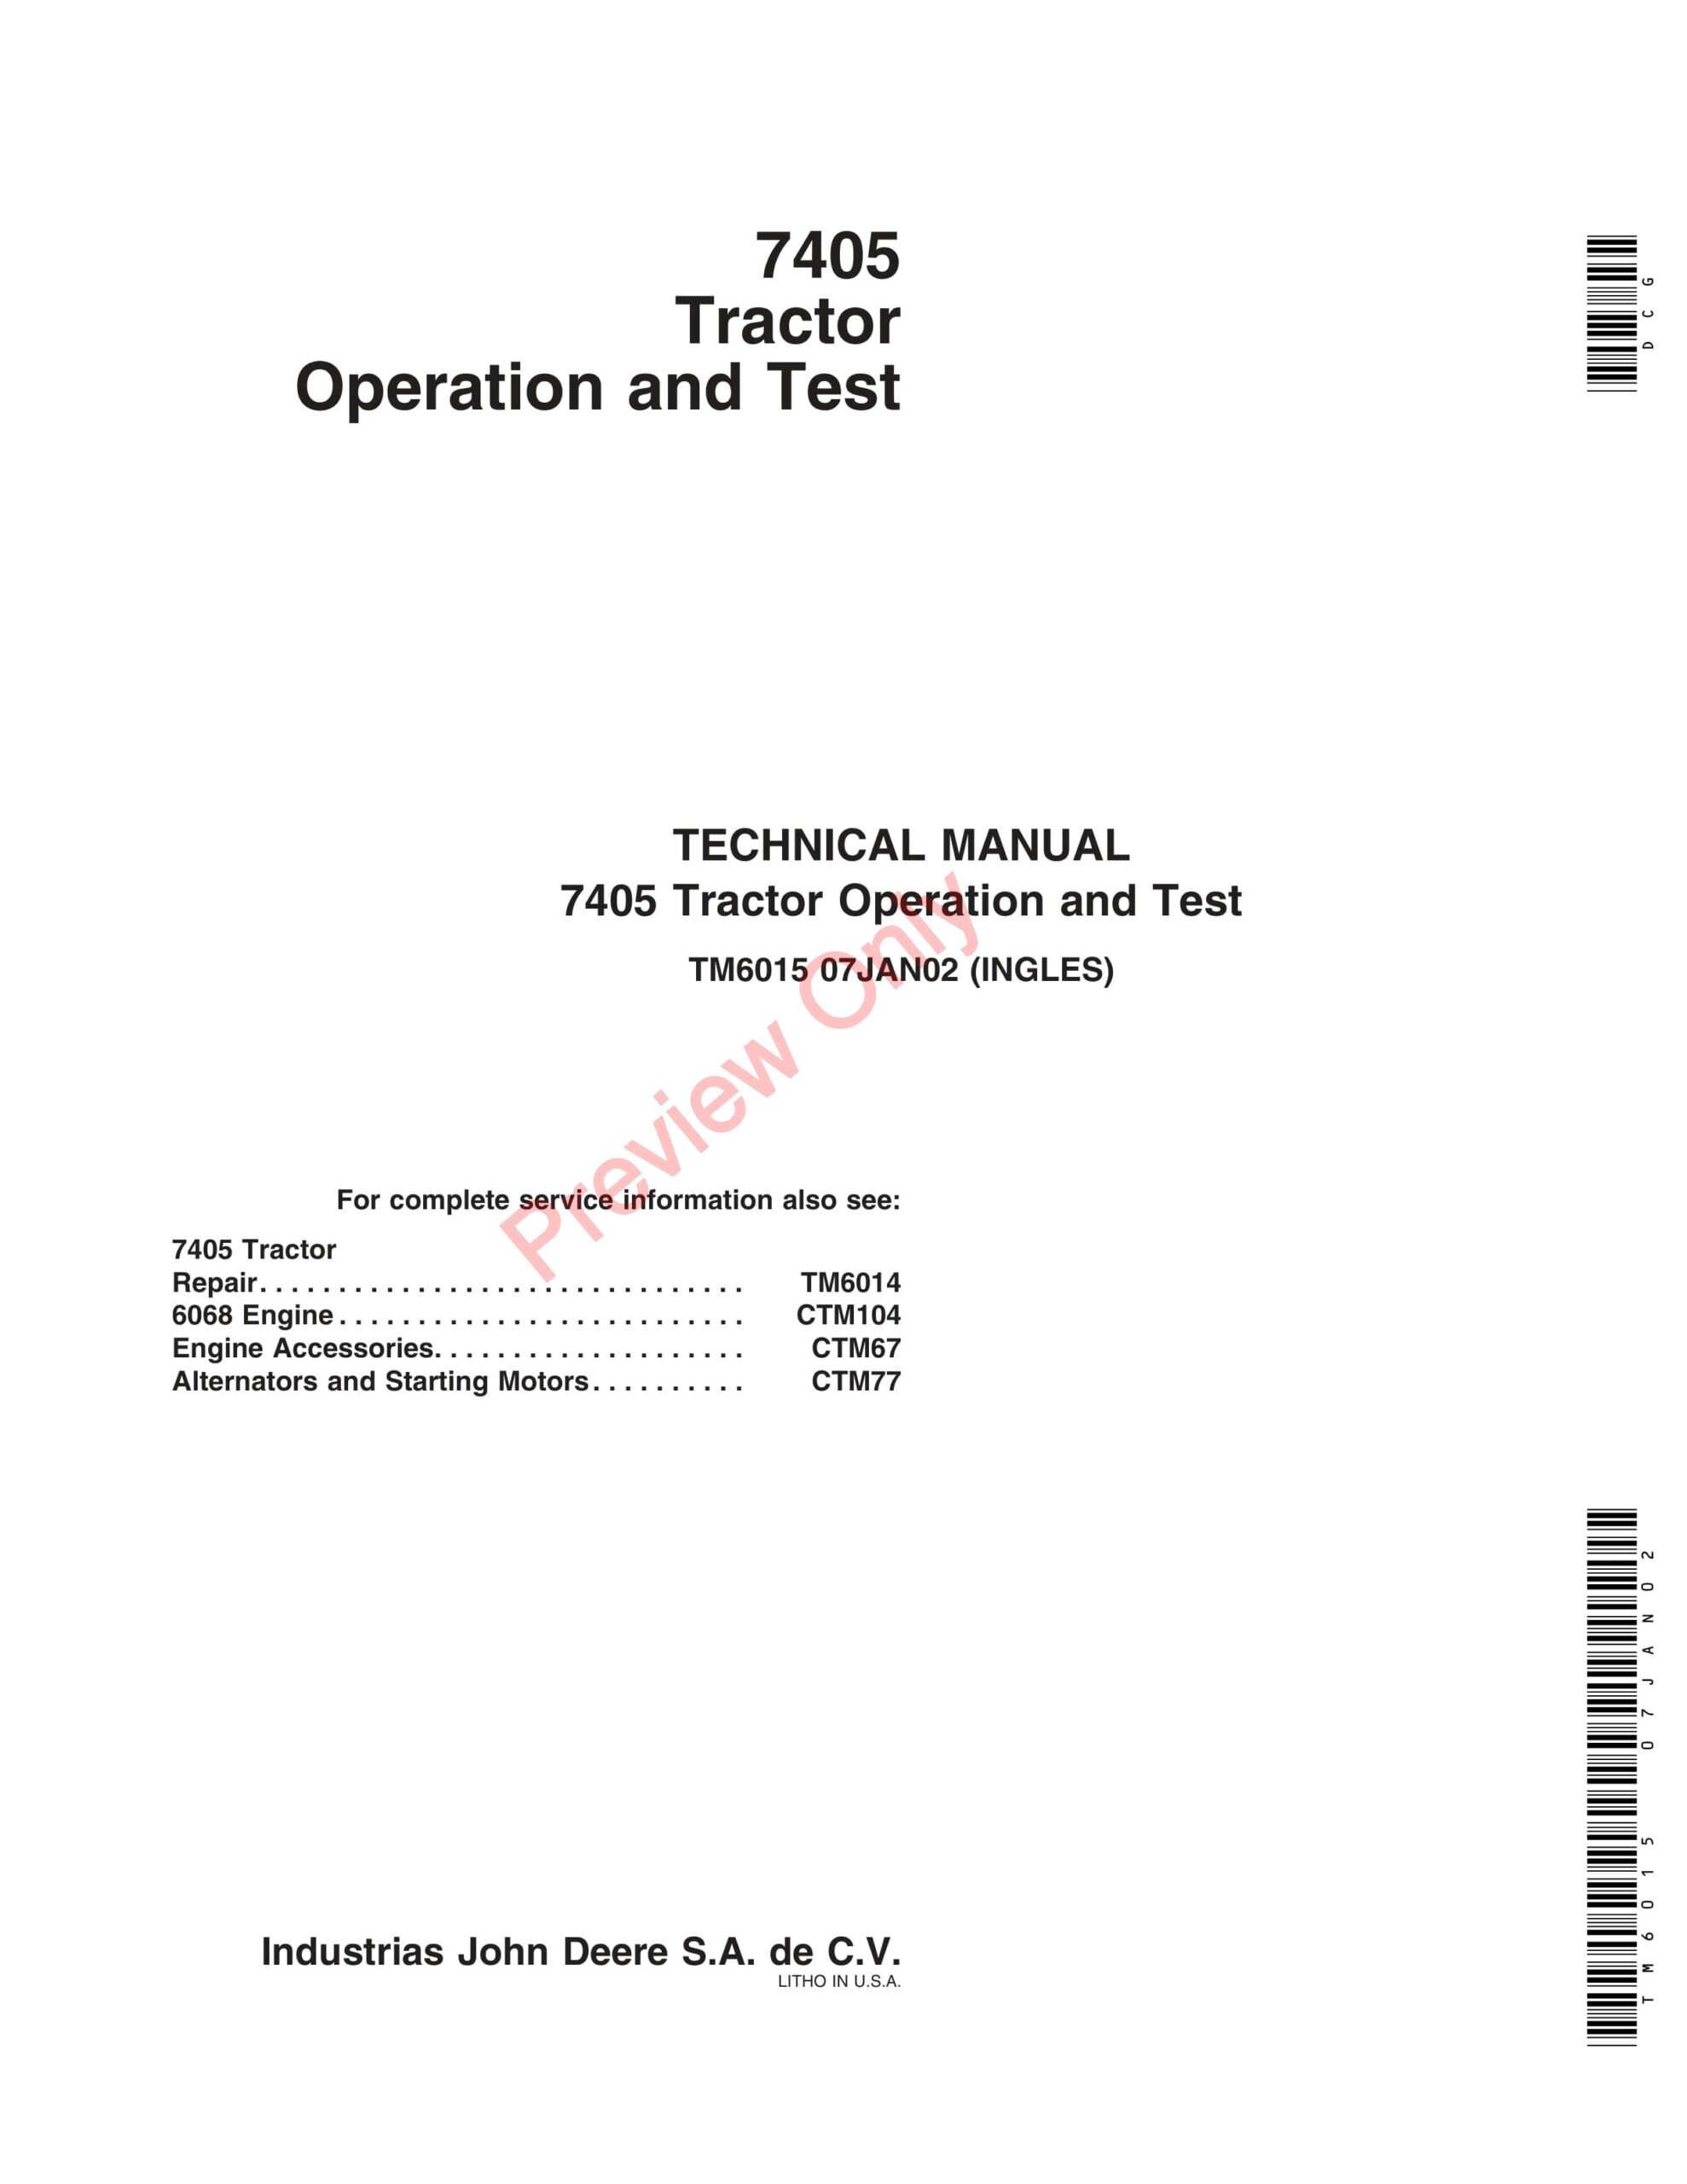 John Deere 7405 Tractor Technical Manual TM6015 07JAN02-1